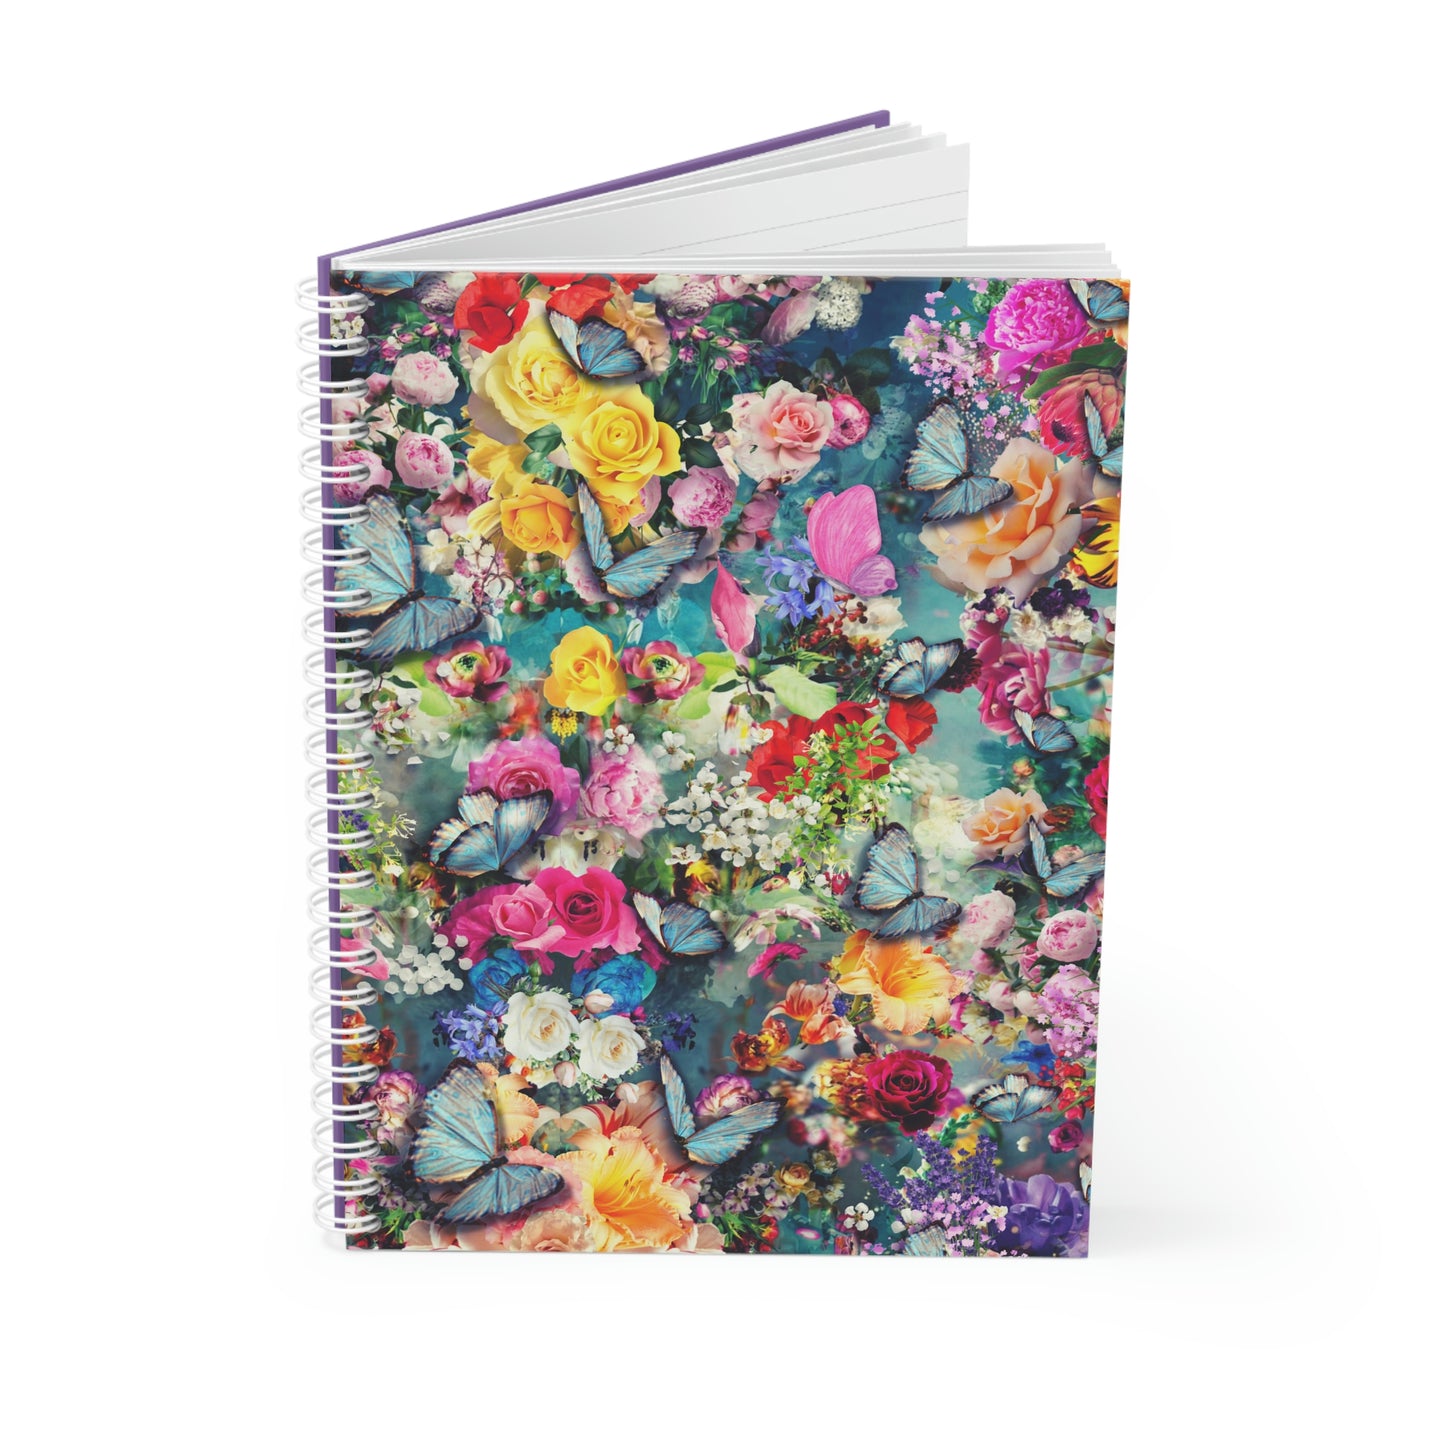 Floral Explosion Spiral Notebook